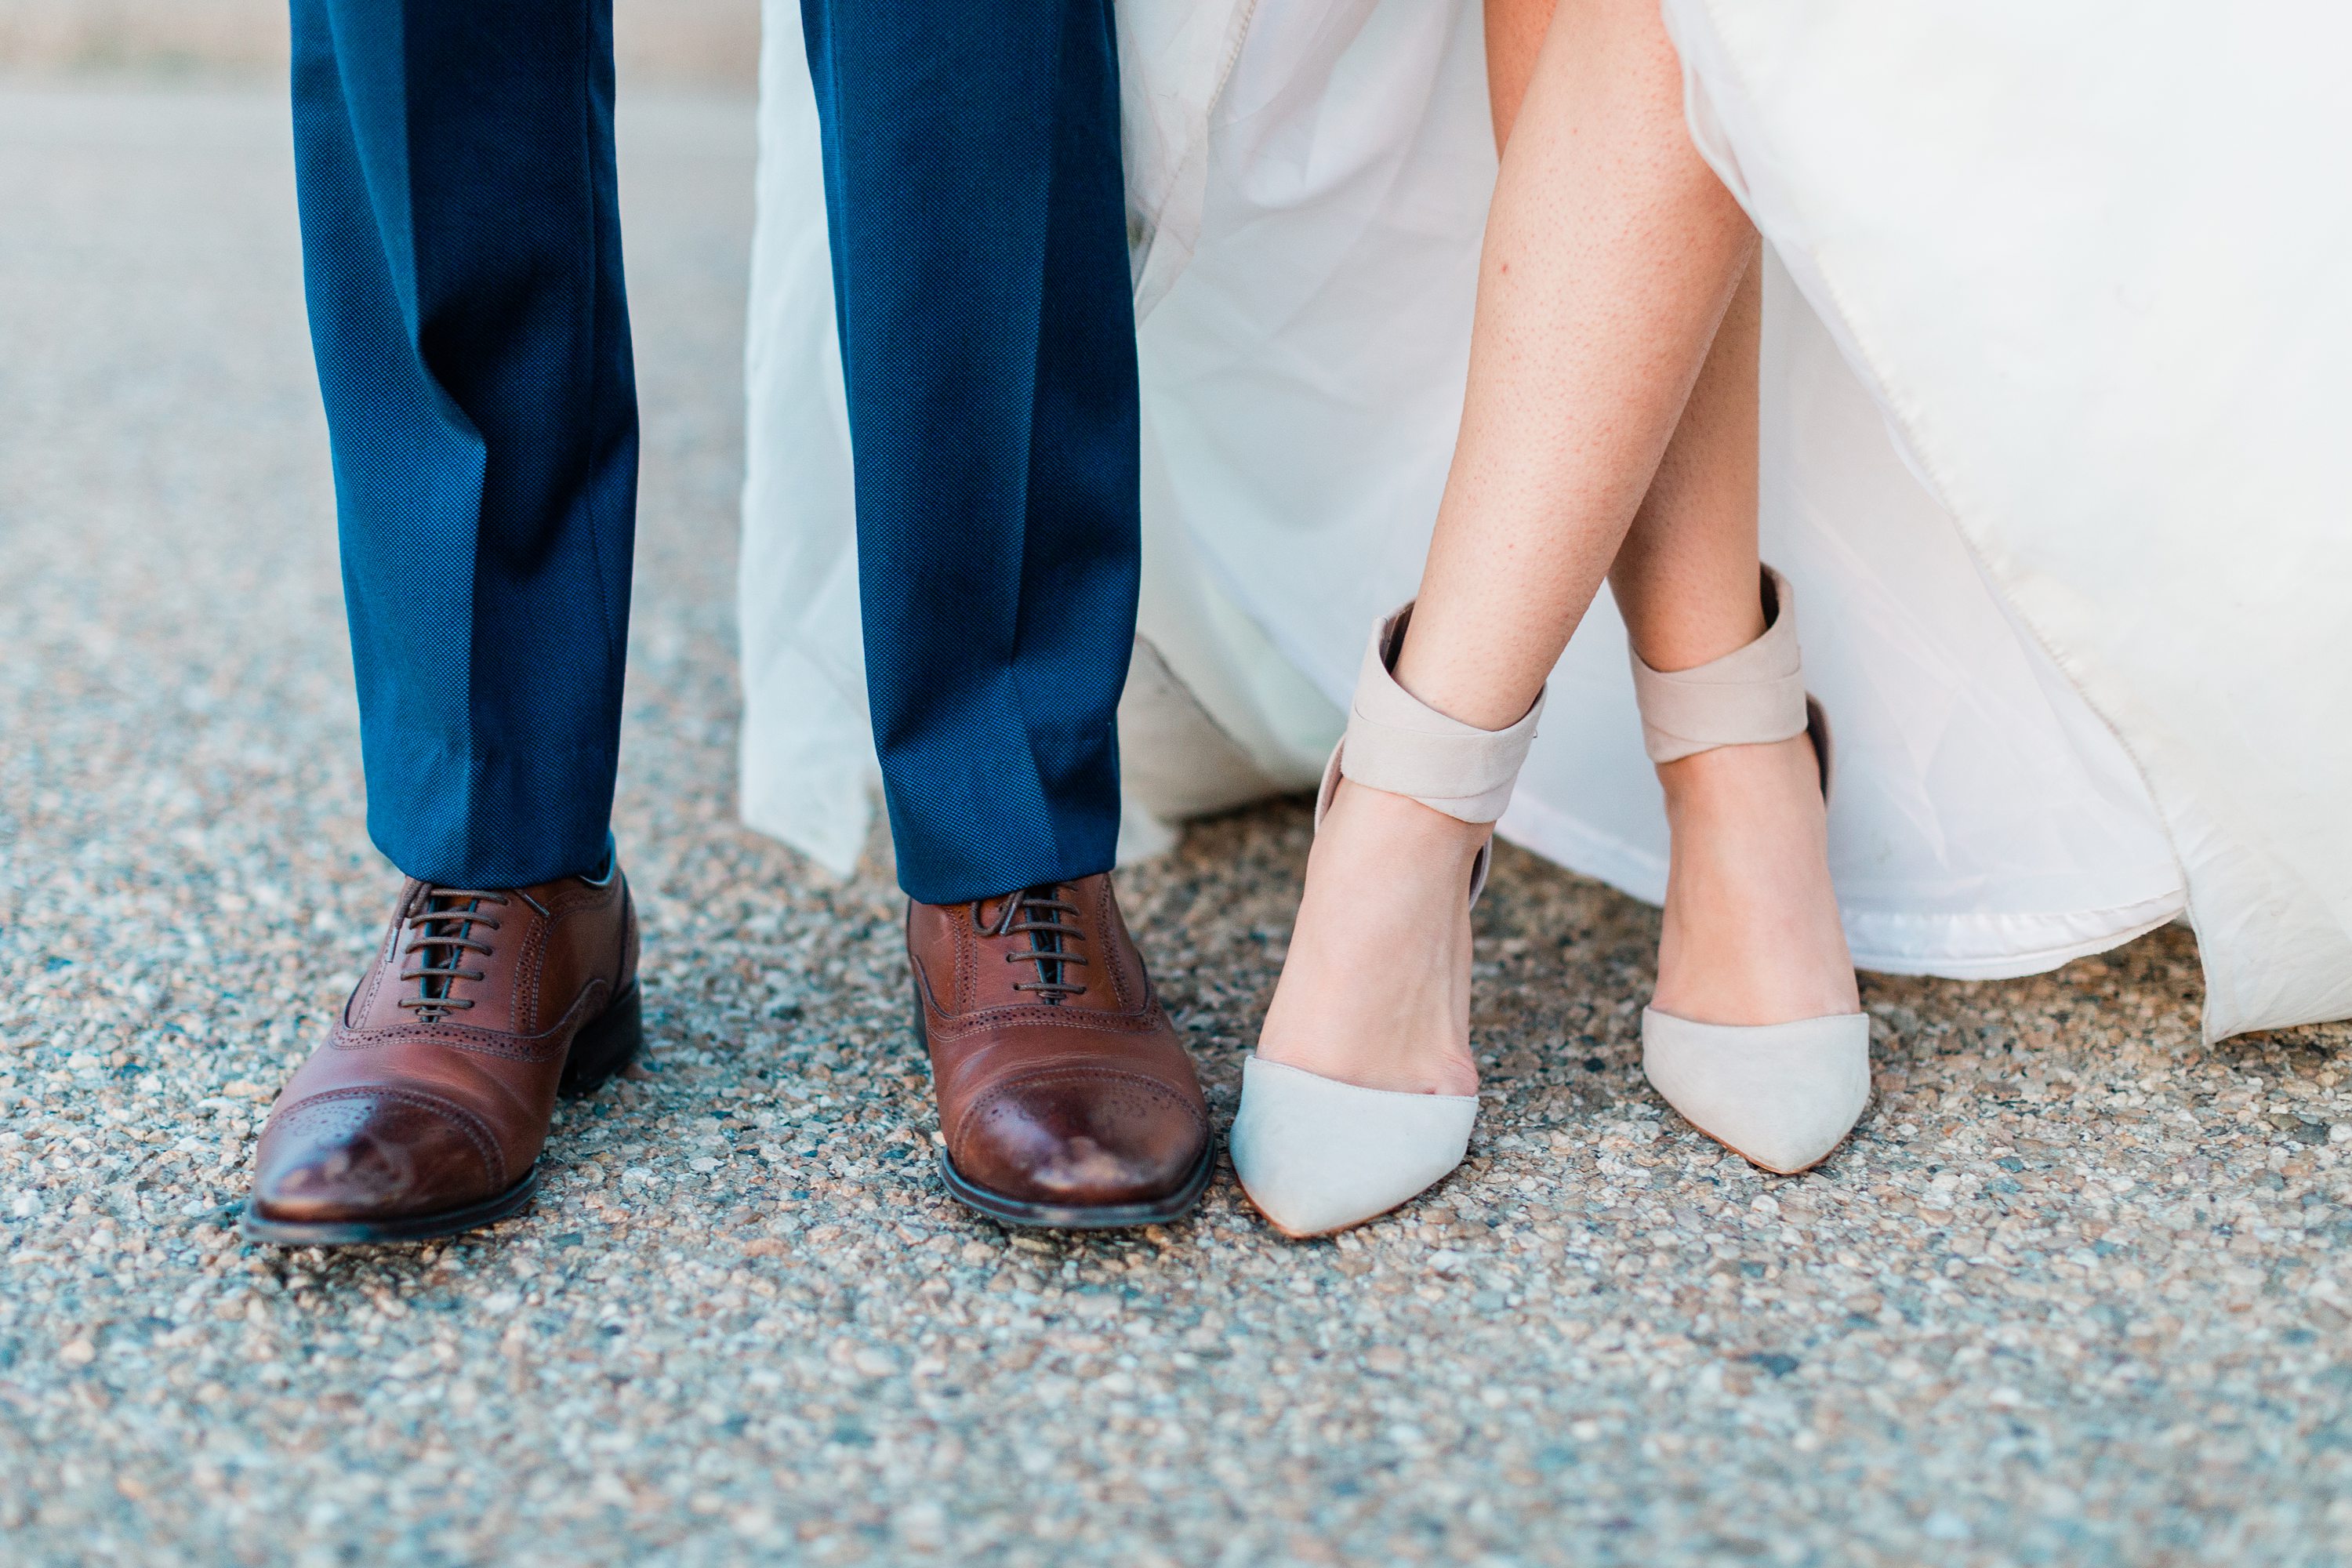 boise wedding photographer,washington weddings,grooms shoes,bride and groom details